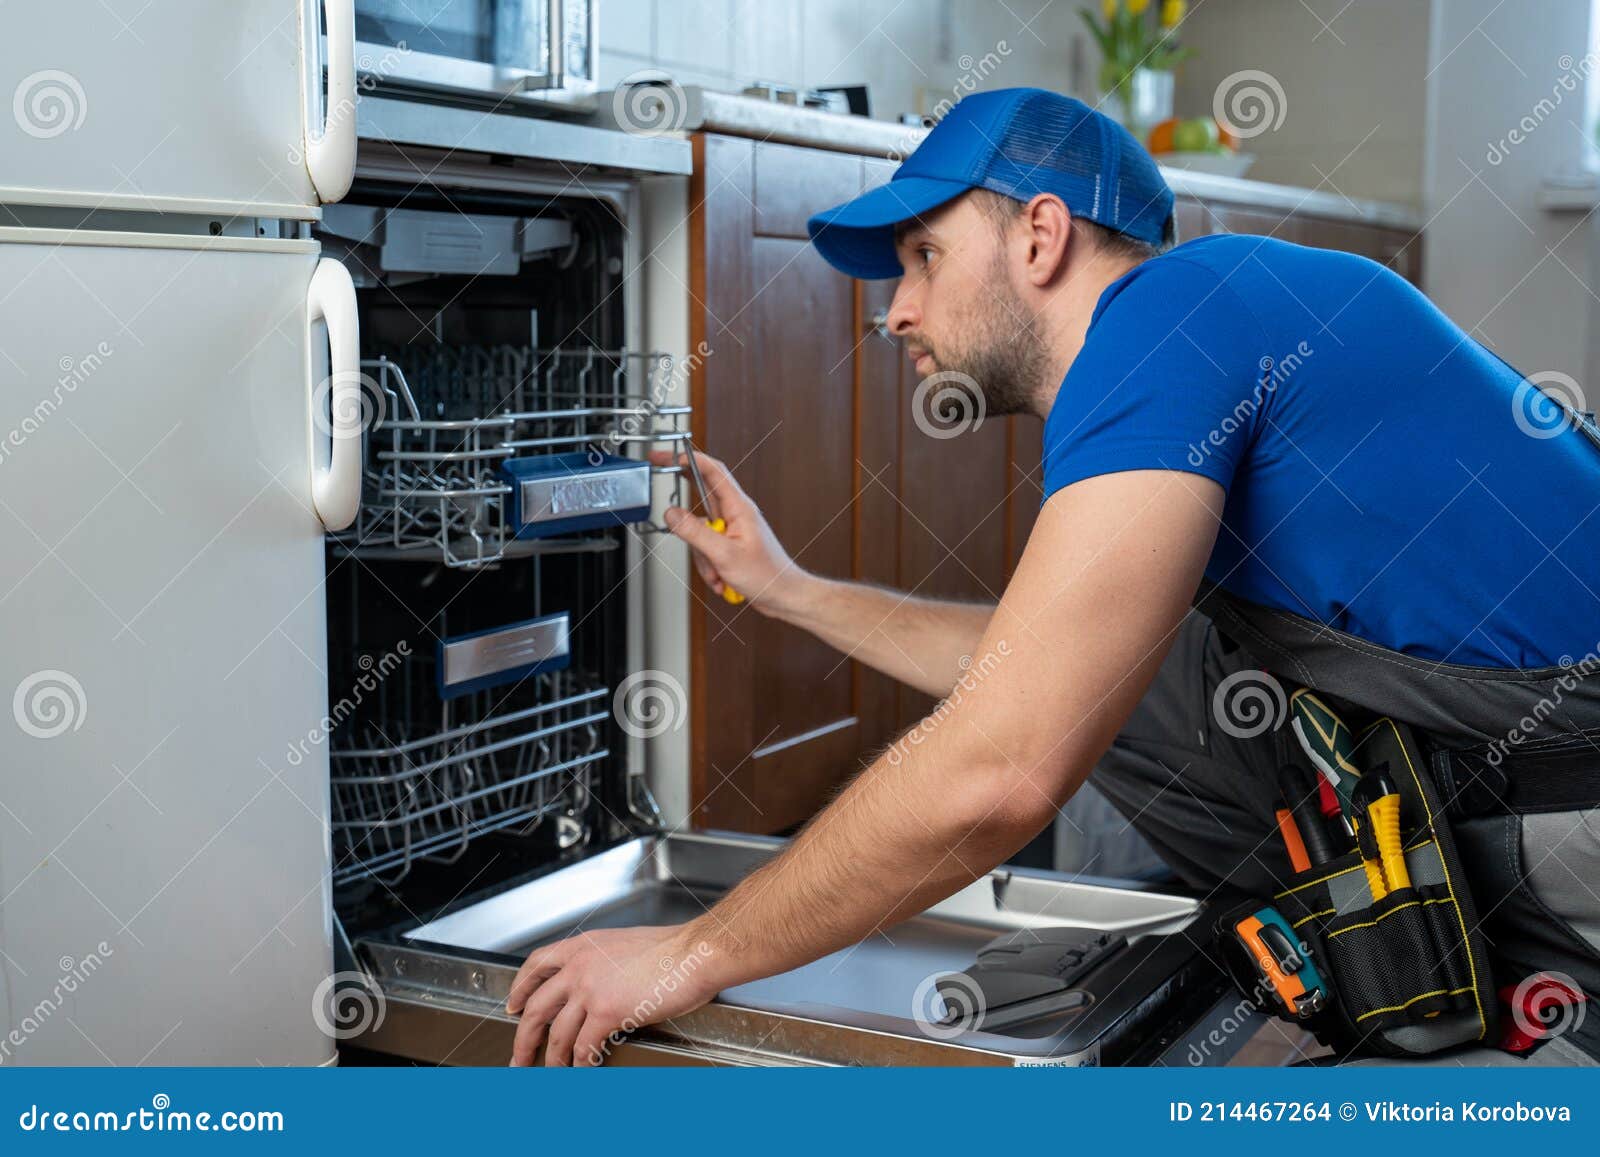 repair of dishwashers. repairman repairing dishwasher in kitchen